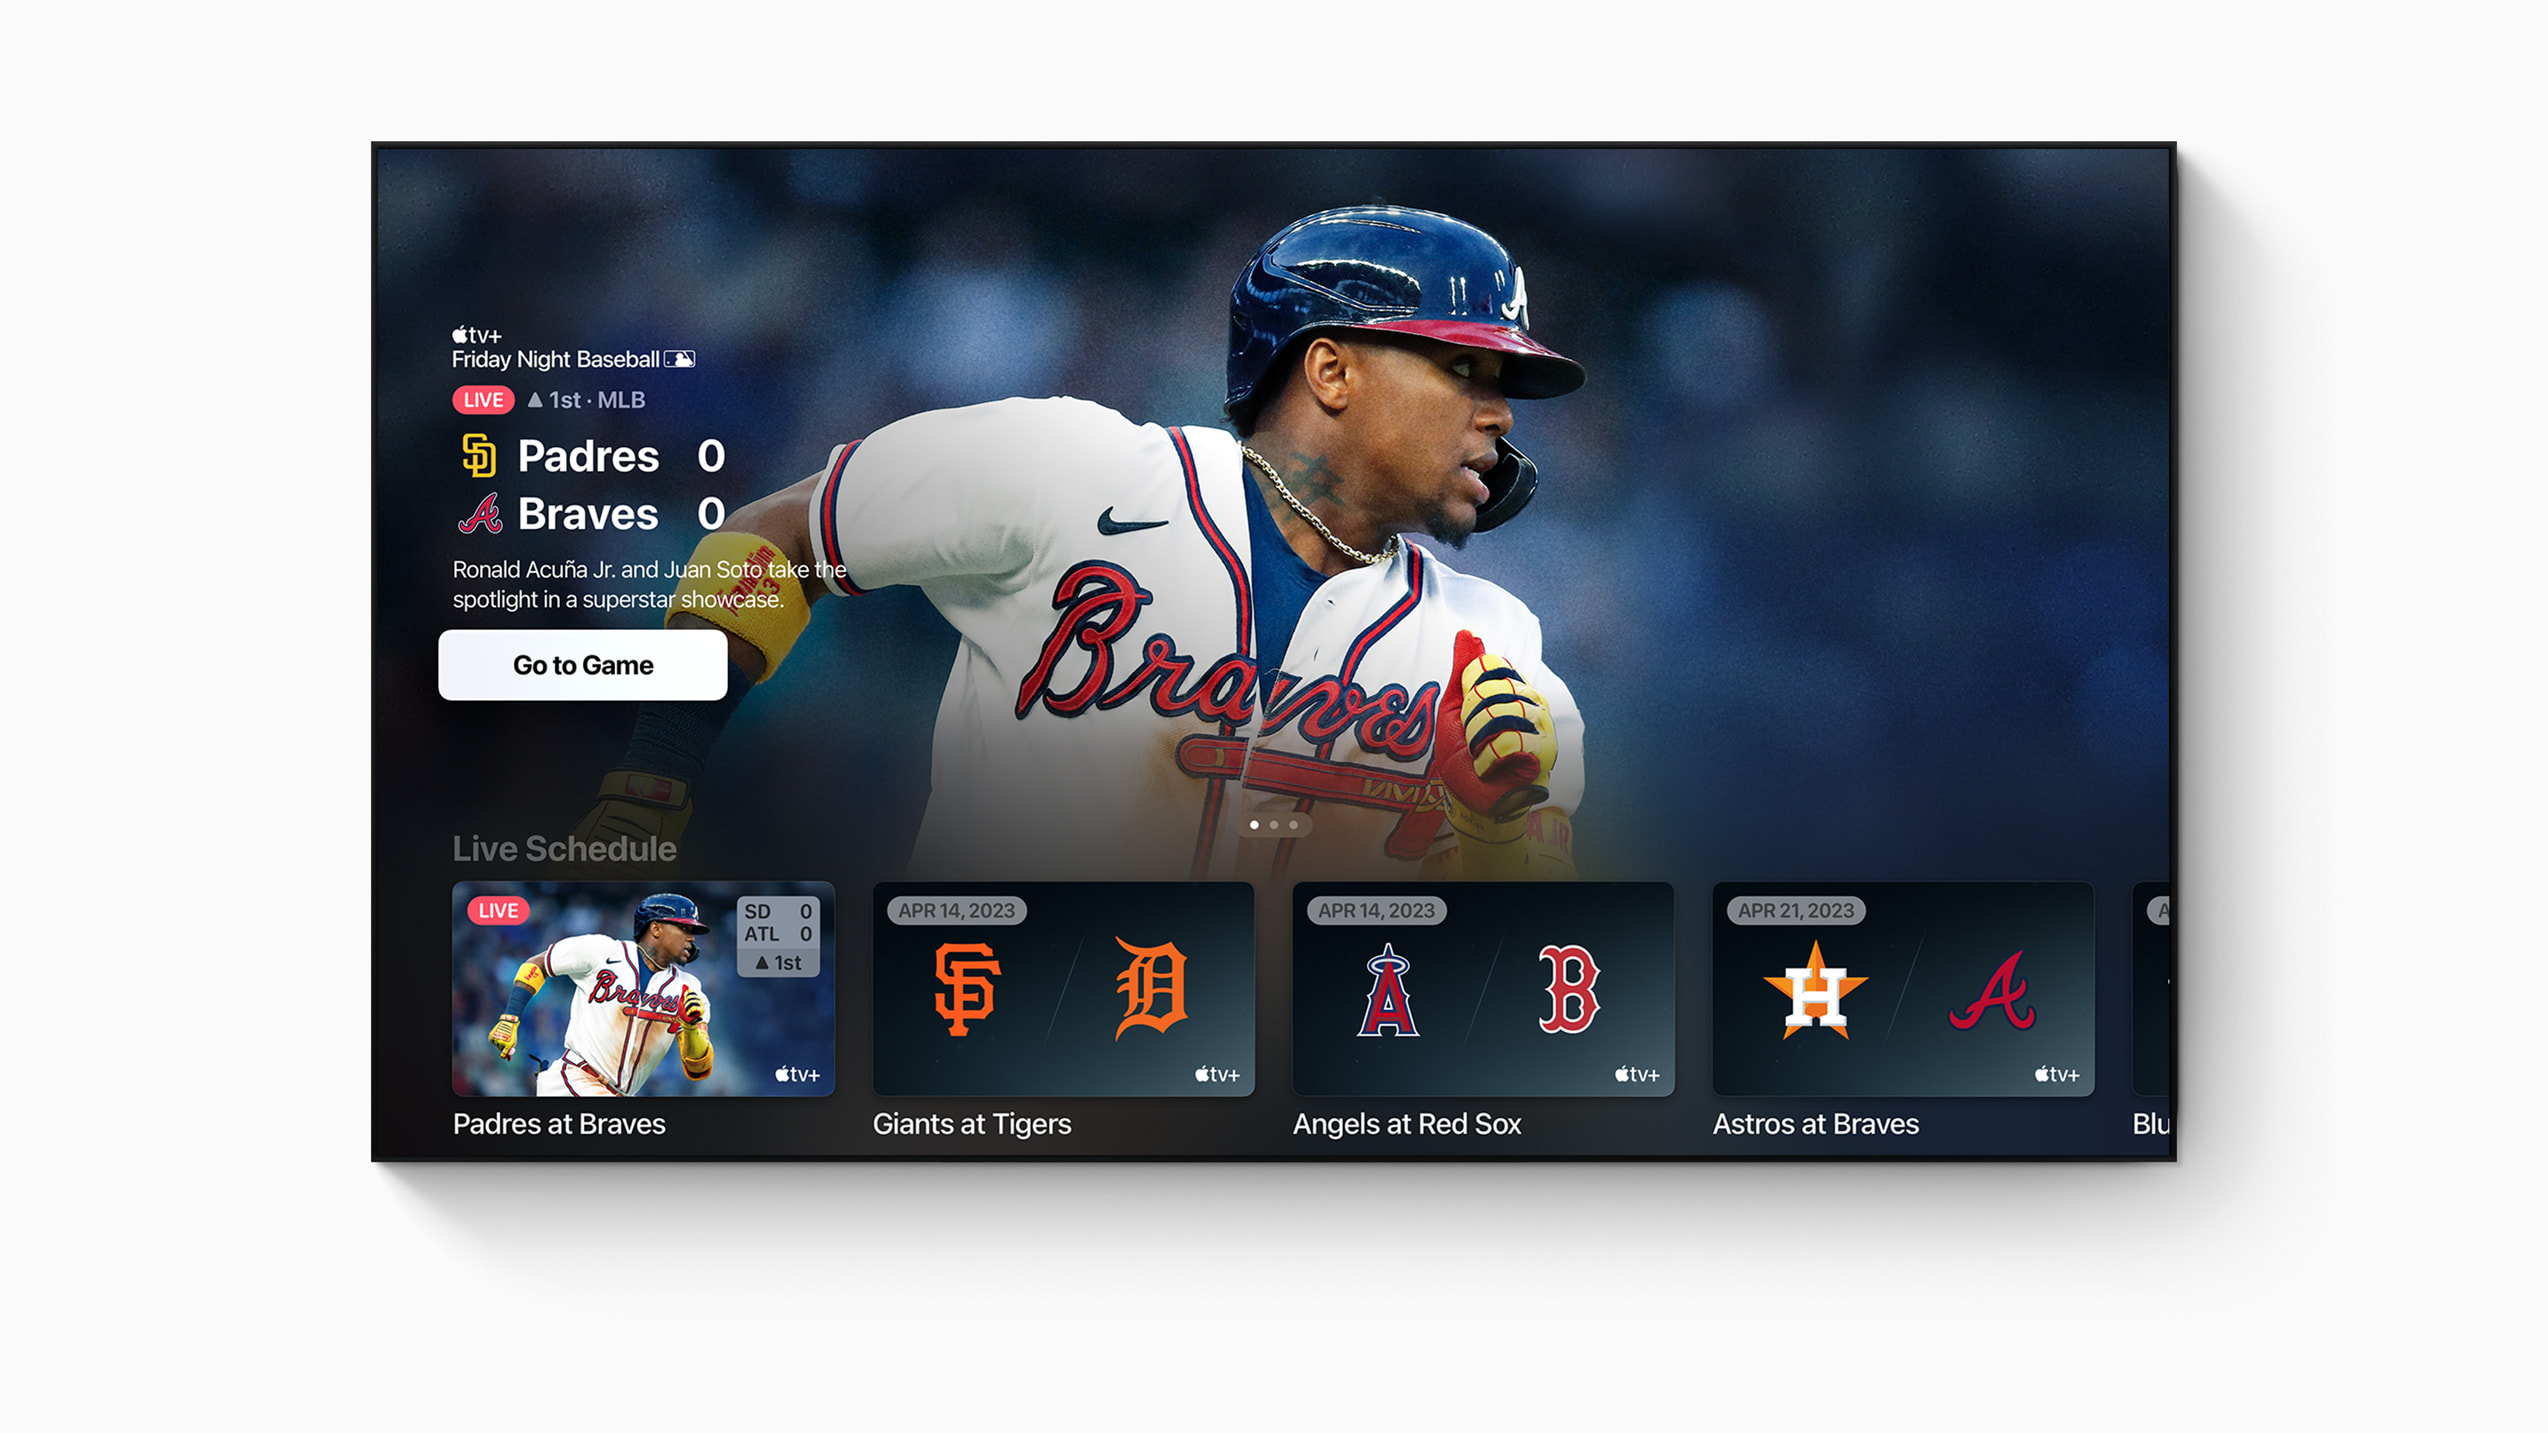 “Friday Night Baseball” resumes on Apple TV+ on April 7